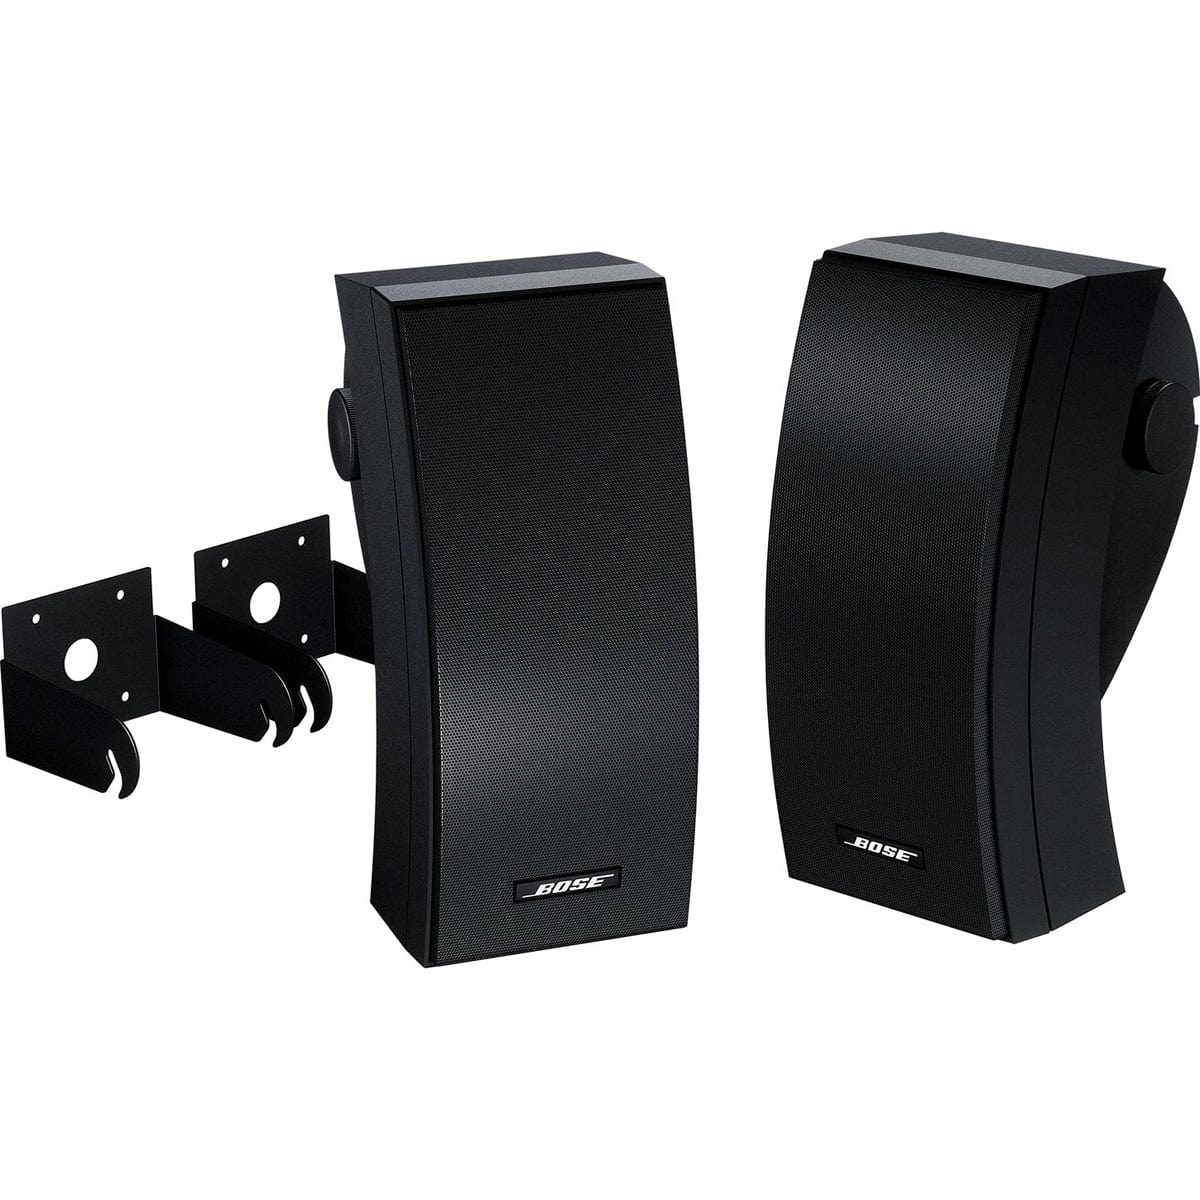 Bose 251 Environmental Speakers in Black include Wall Bracket - Atlantic Electrics